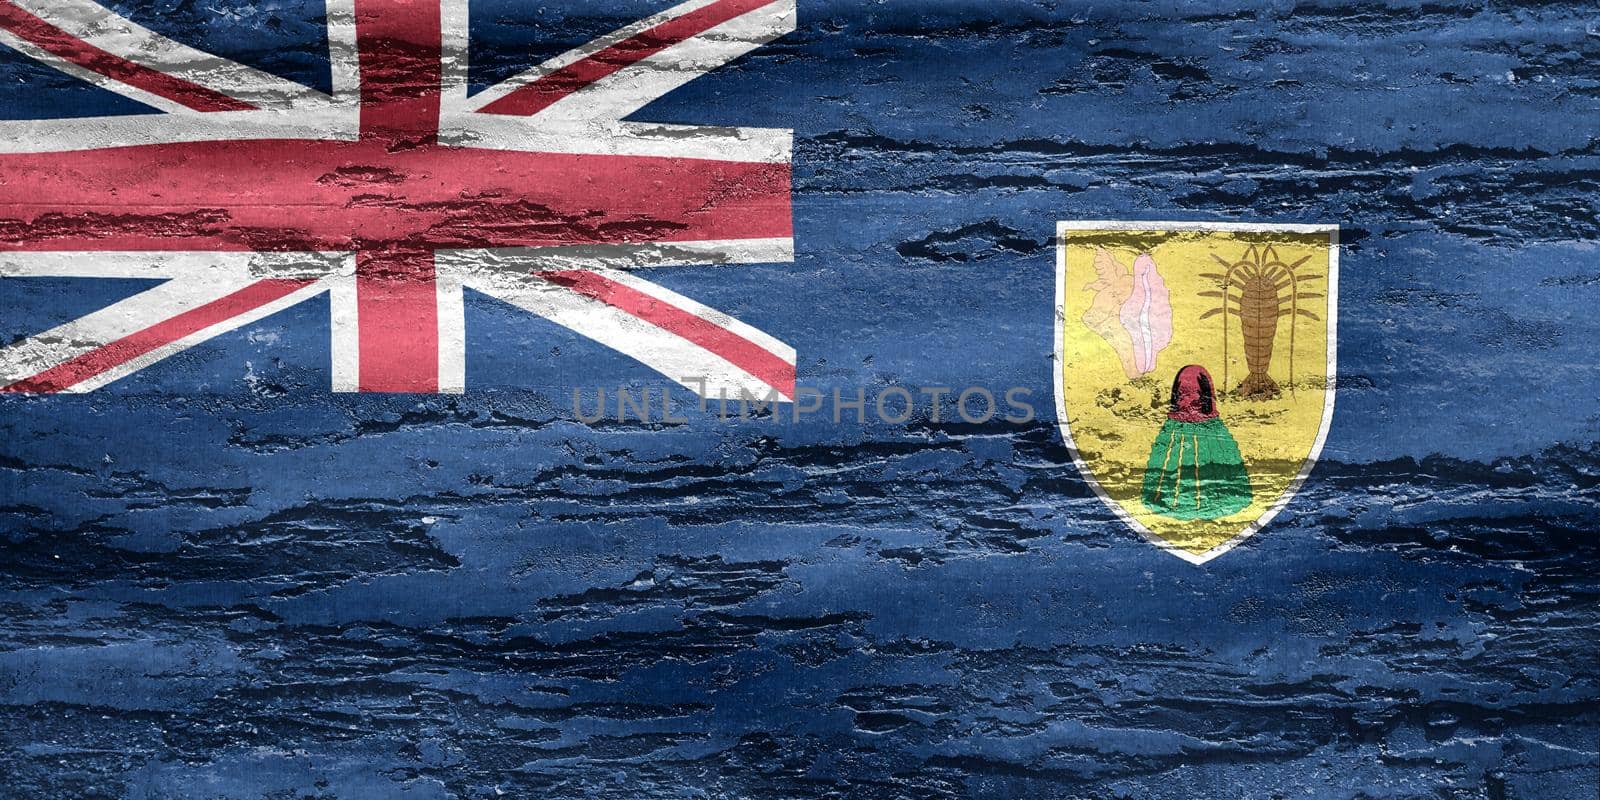 3D-Illustration of a Caicos Islands flag - realistic waving fabric flag.